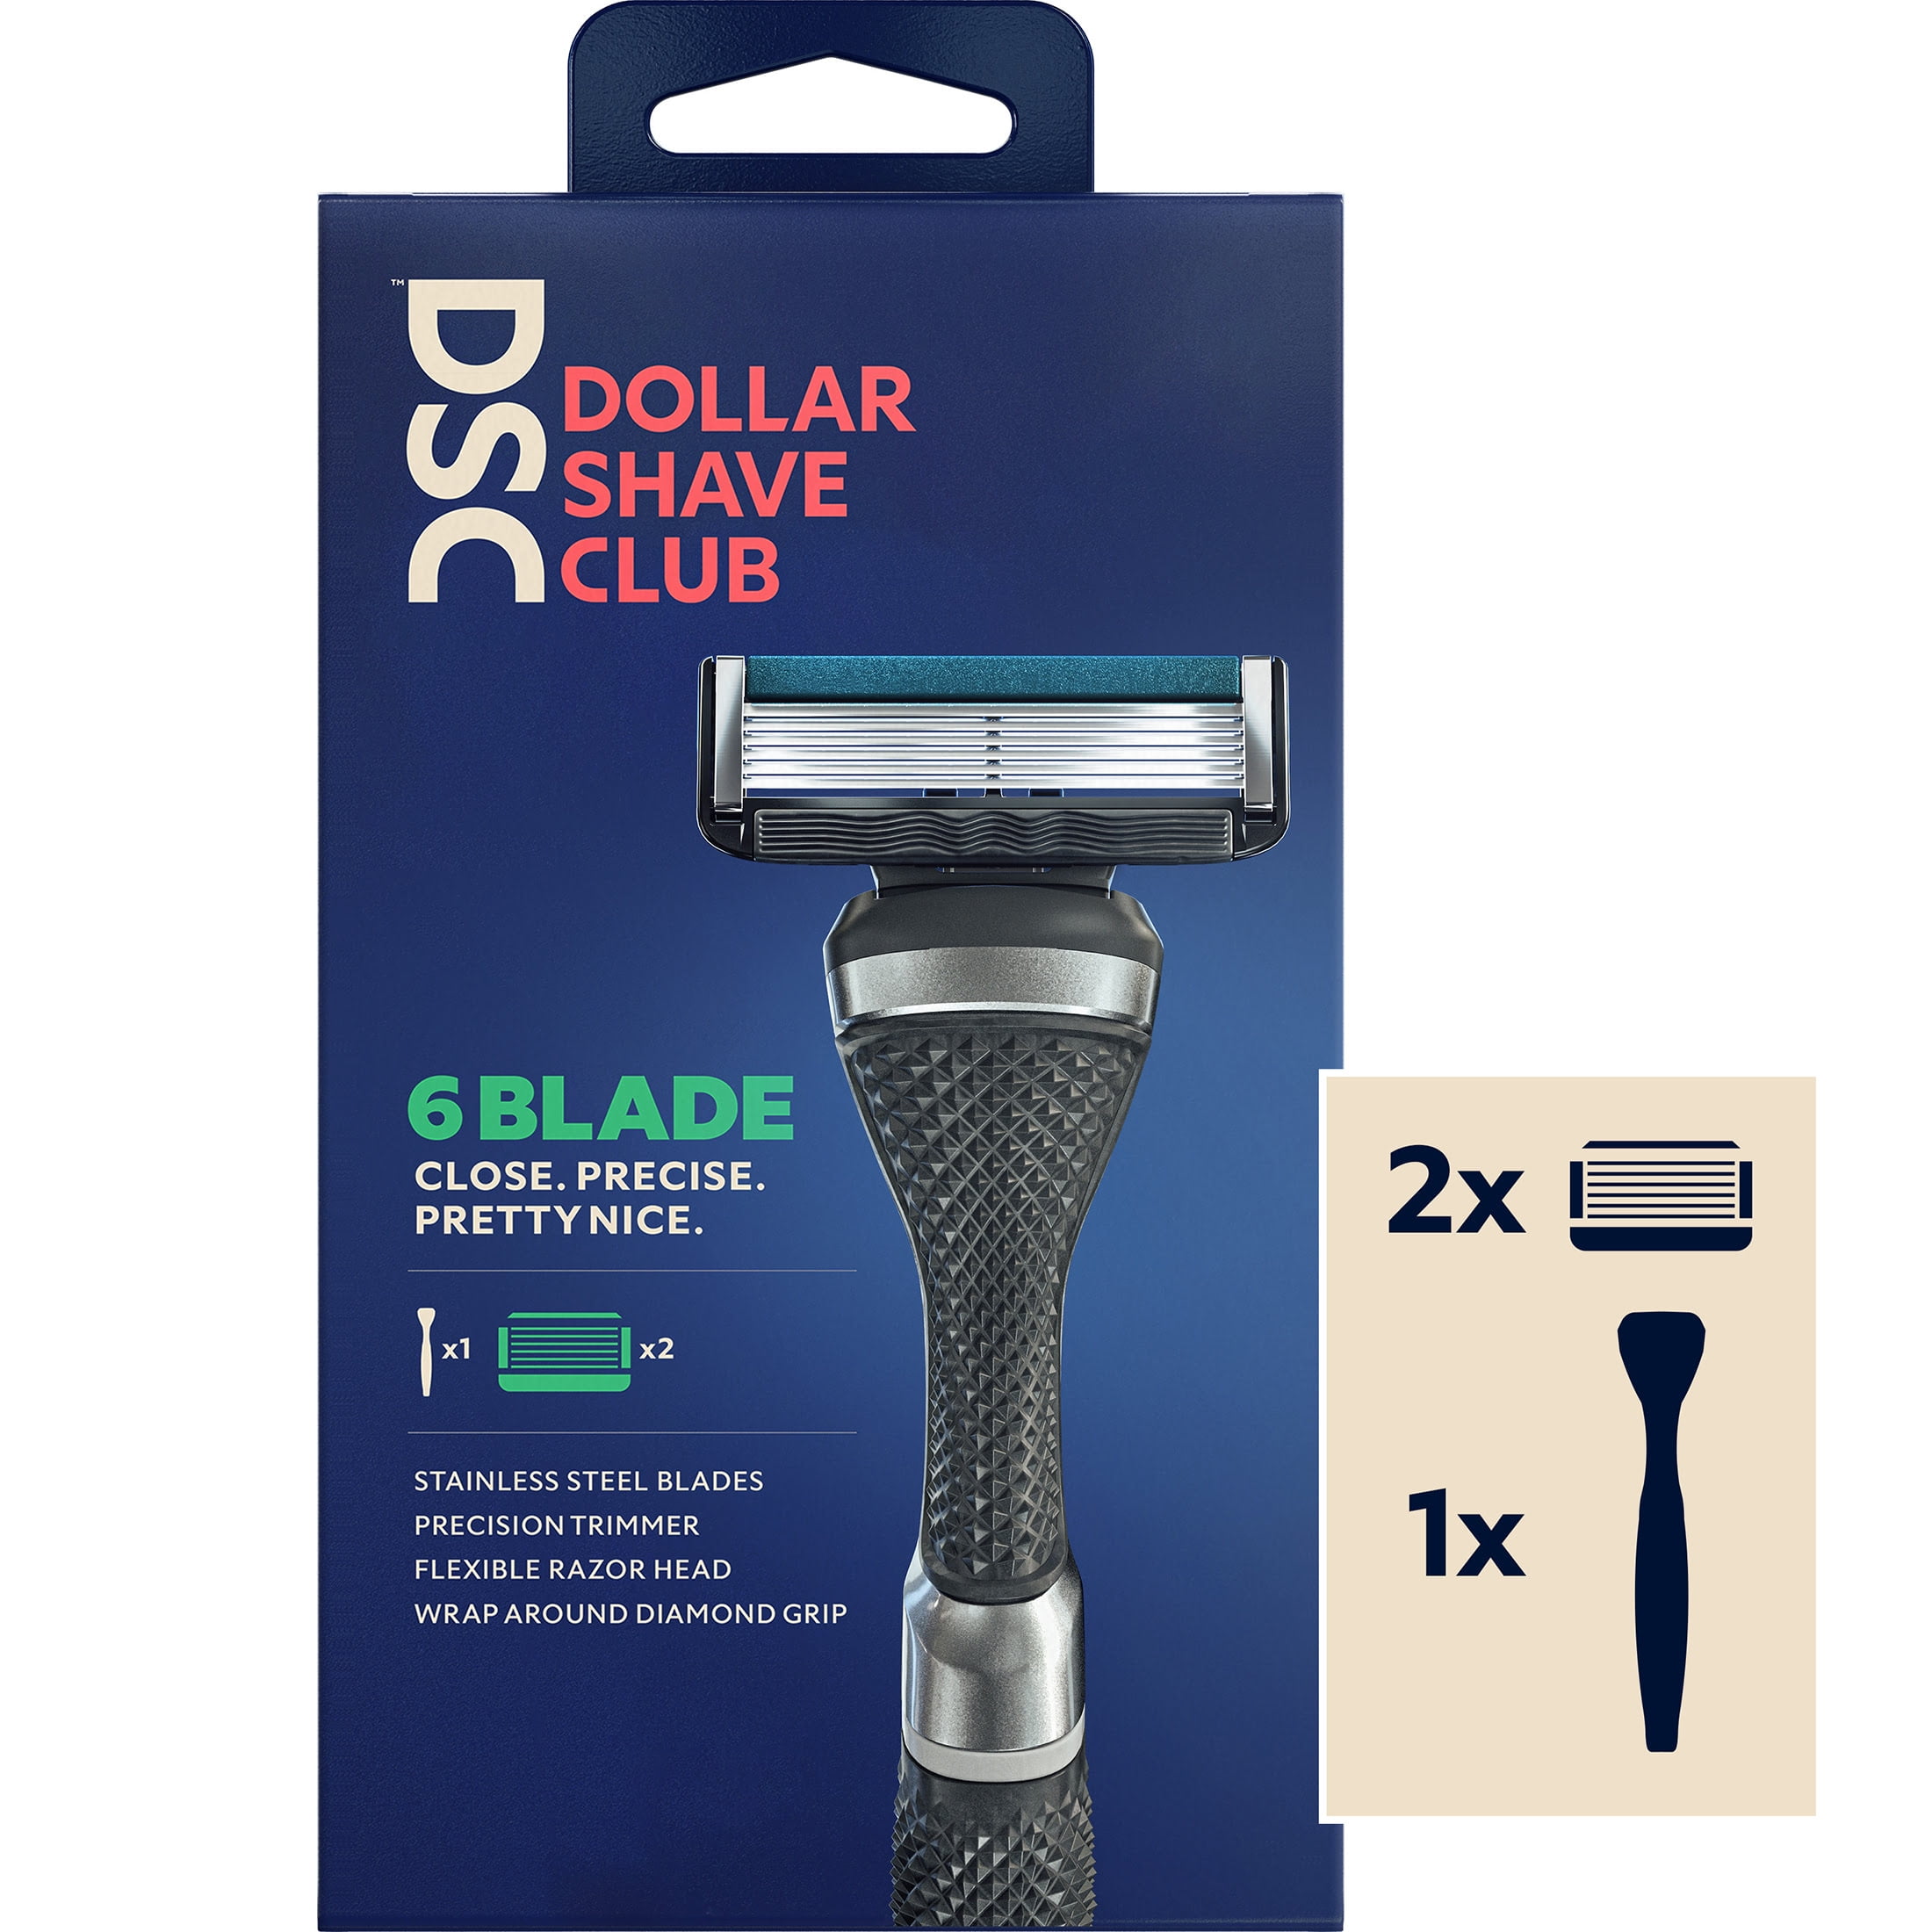 Dollar Shave Club Men's Razor 6-Blade Starter Set 1 handle, 2x 6-blade razor blade refills